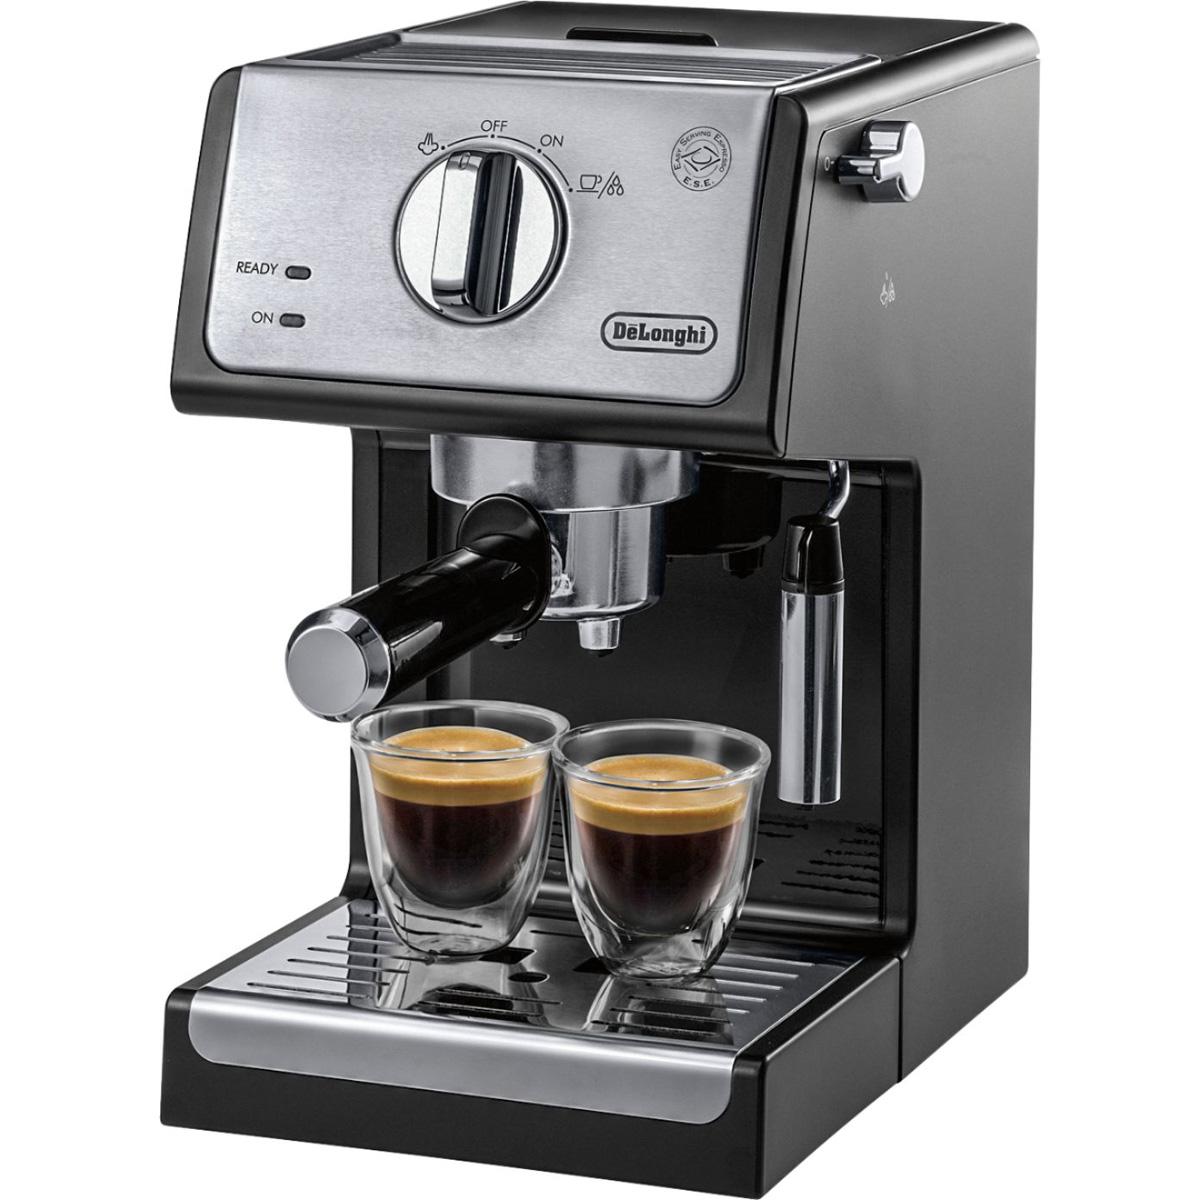 DeLonghi Espresso Machine with 15 Bars of Pressure for $99.99 Shipped